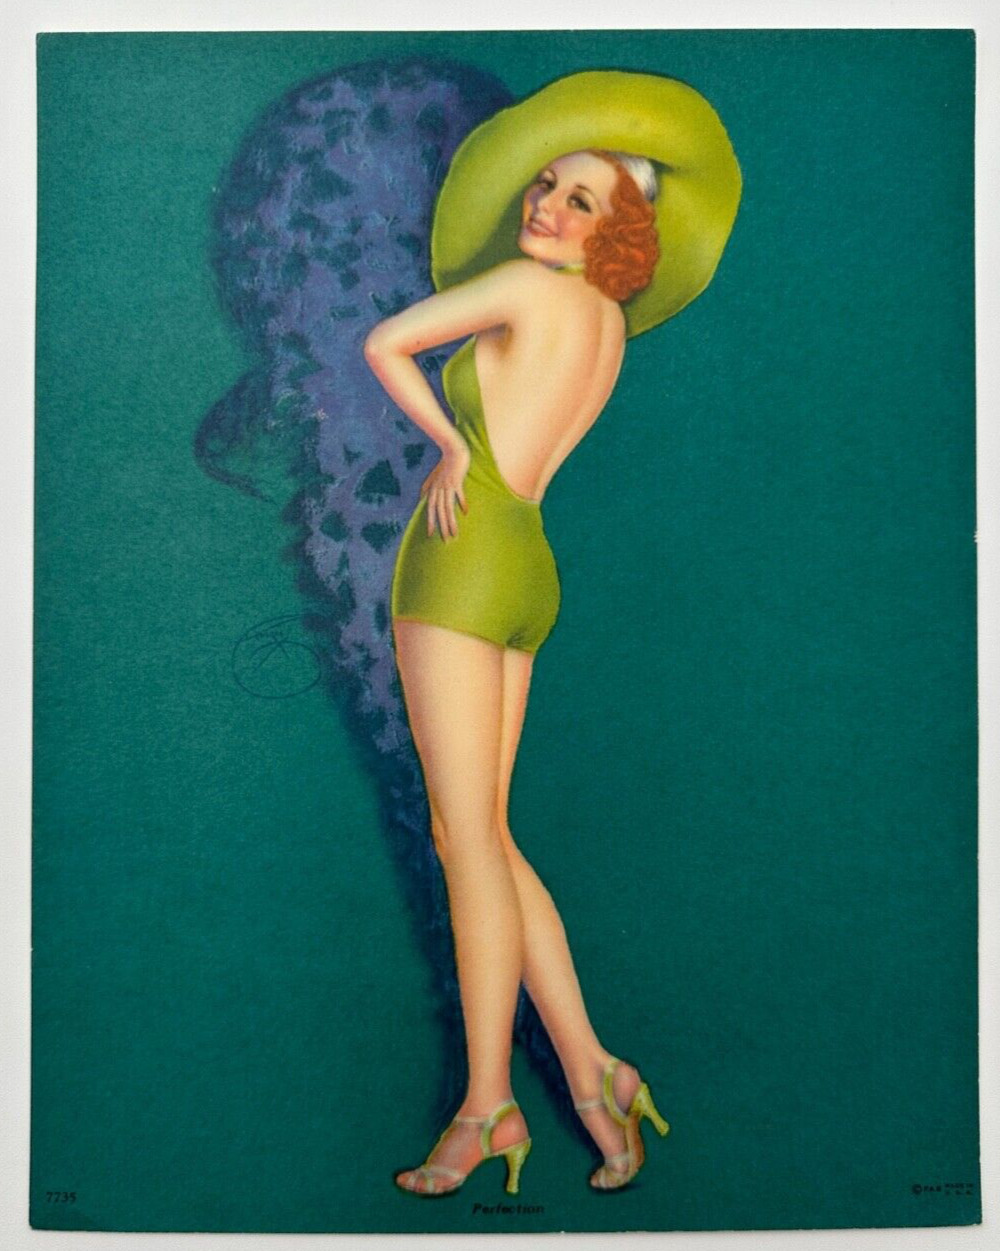 Perfection, Vintage Original Art Deco 1940s Billy DeVorss Pin-Up Print